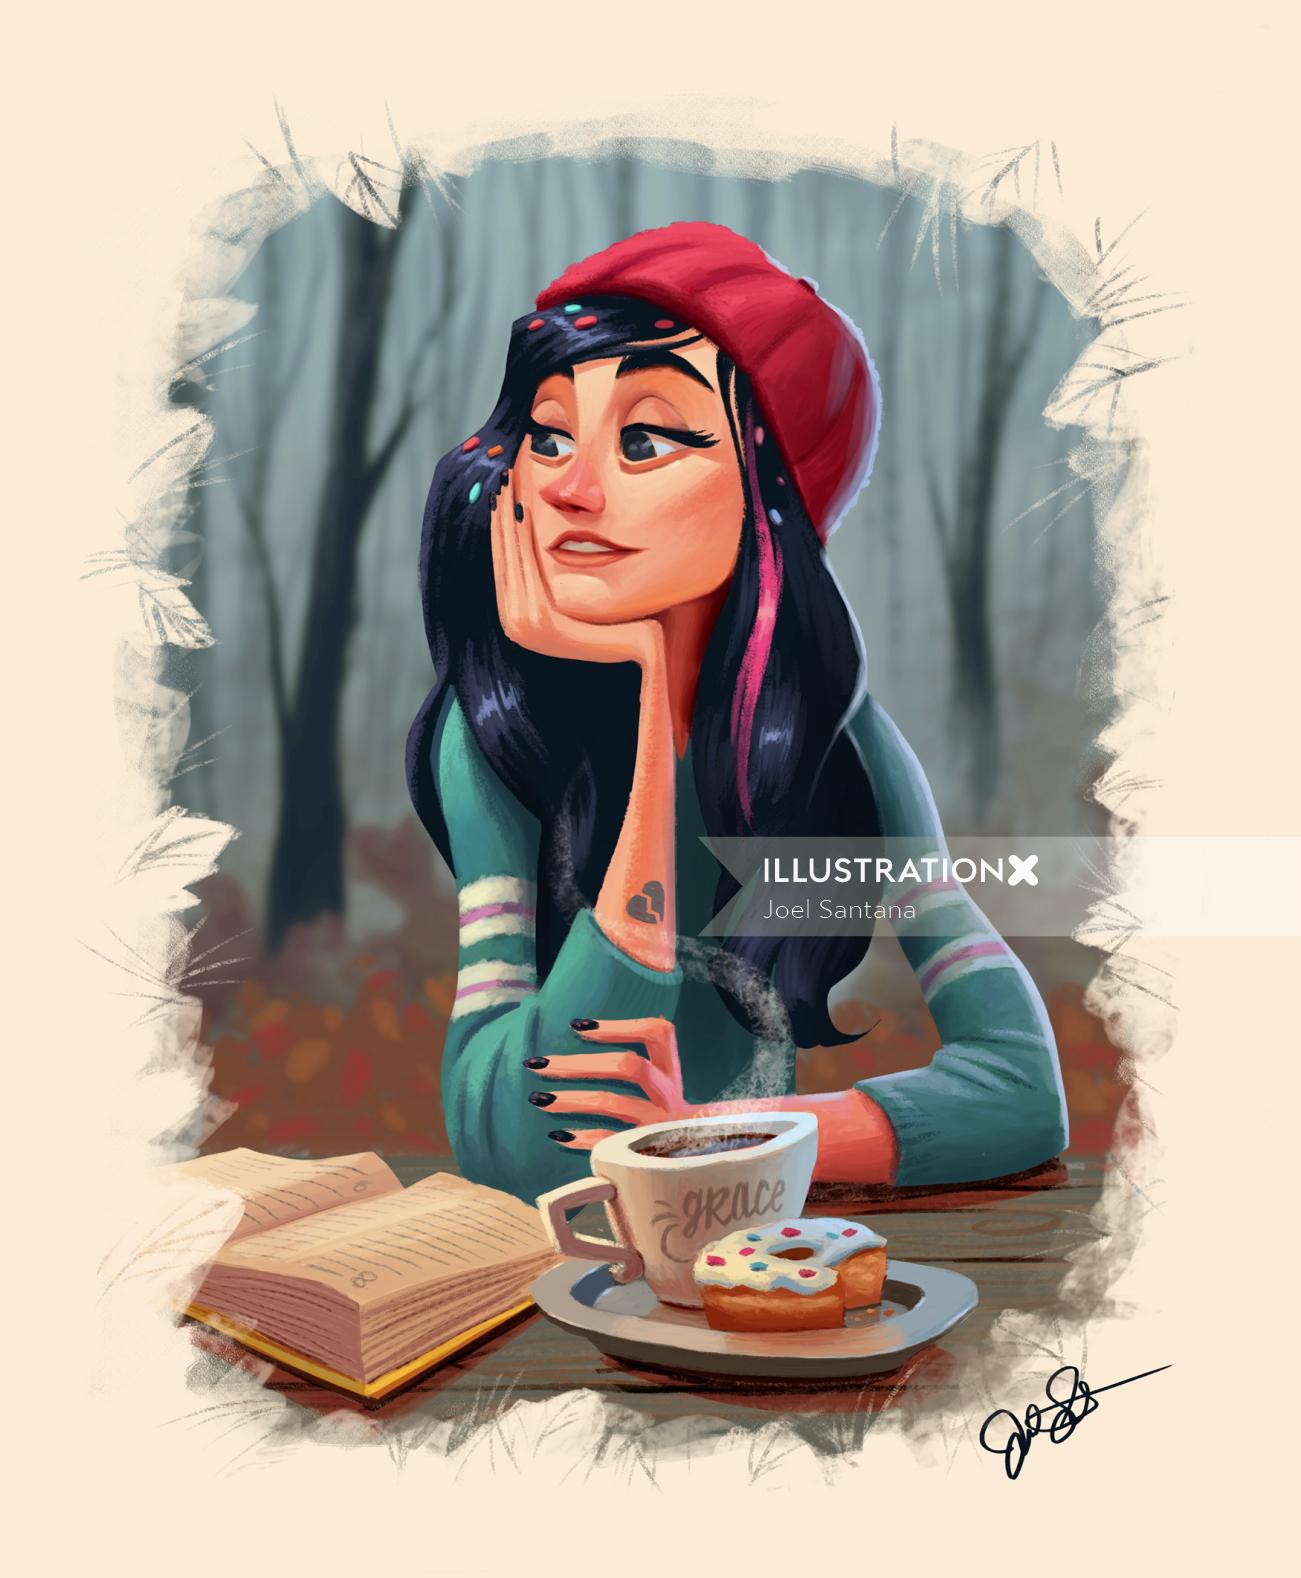 Disney character illustration by Joel Santana